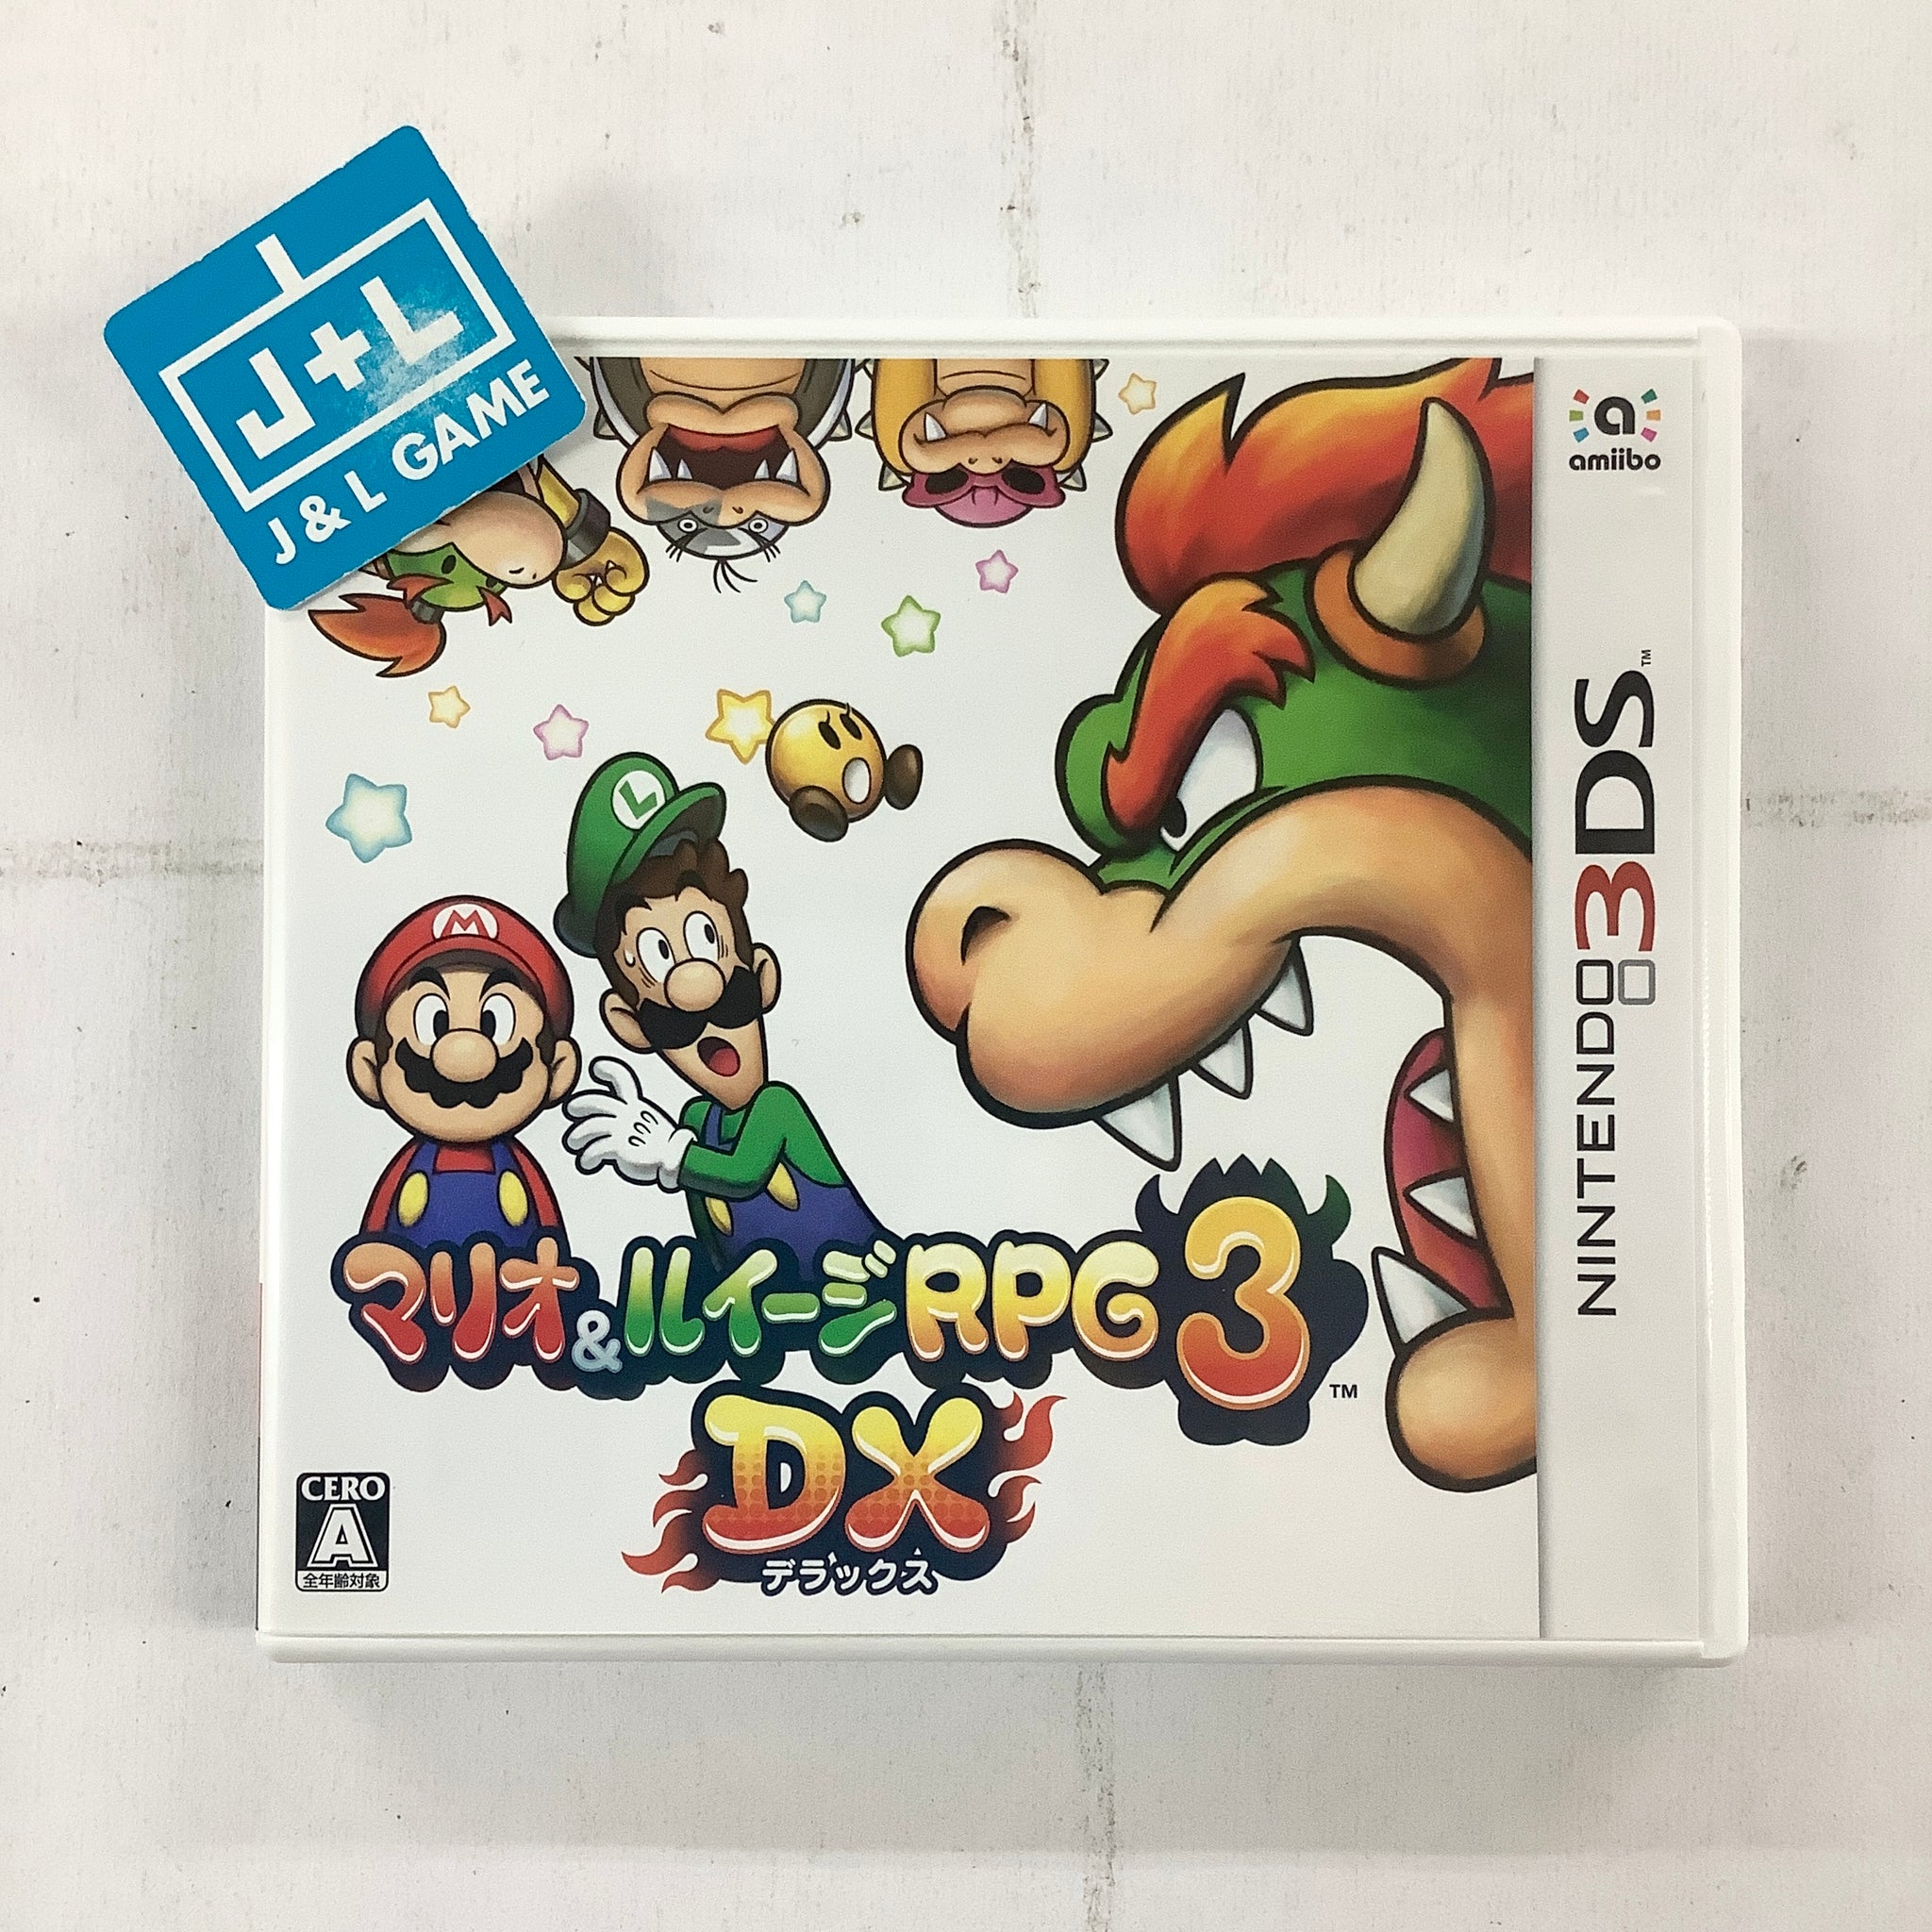 Mario & Luigi RPG 3 DX - Nintendo 3DS [Pre-Owned] (Japanese Import) Video Games Nintendo   